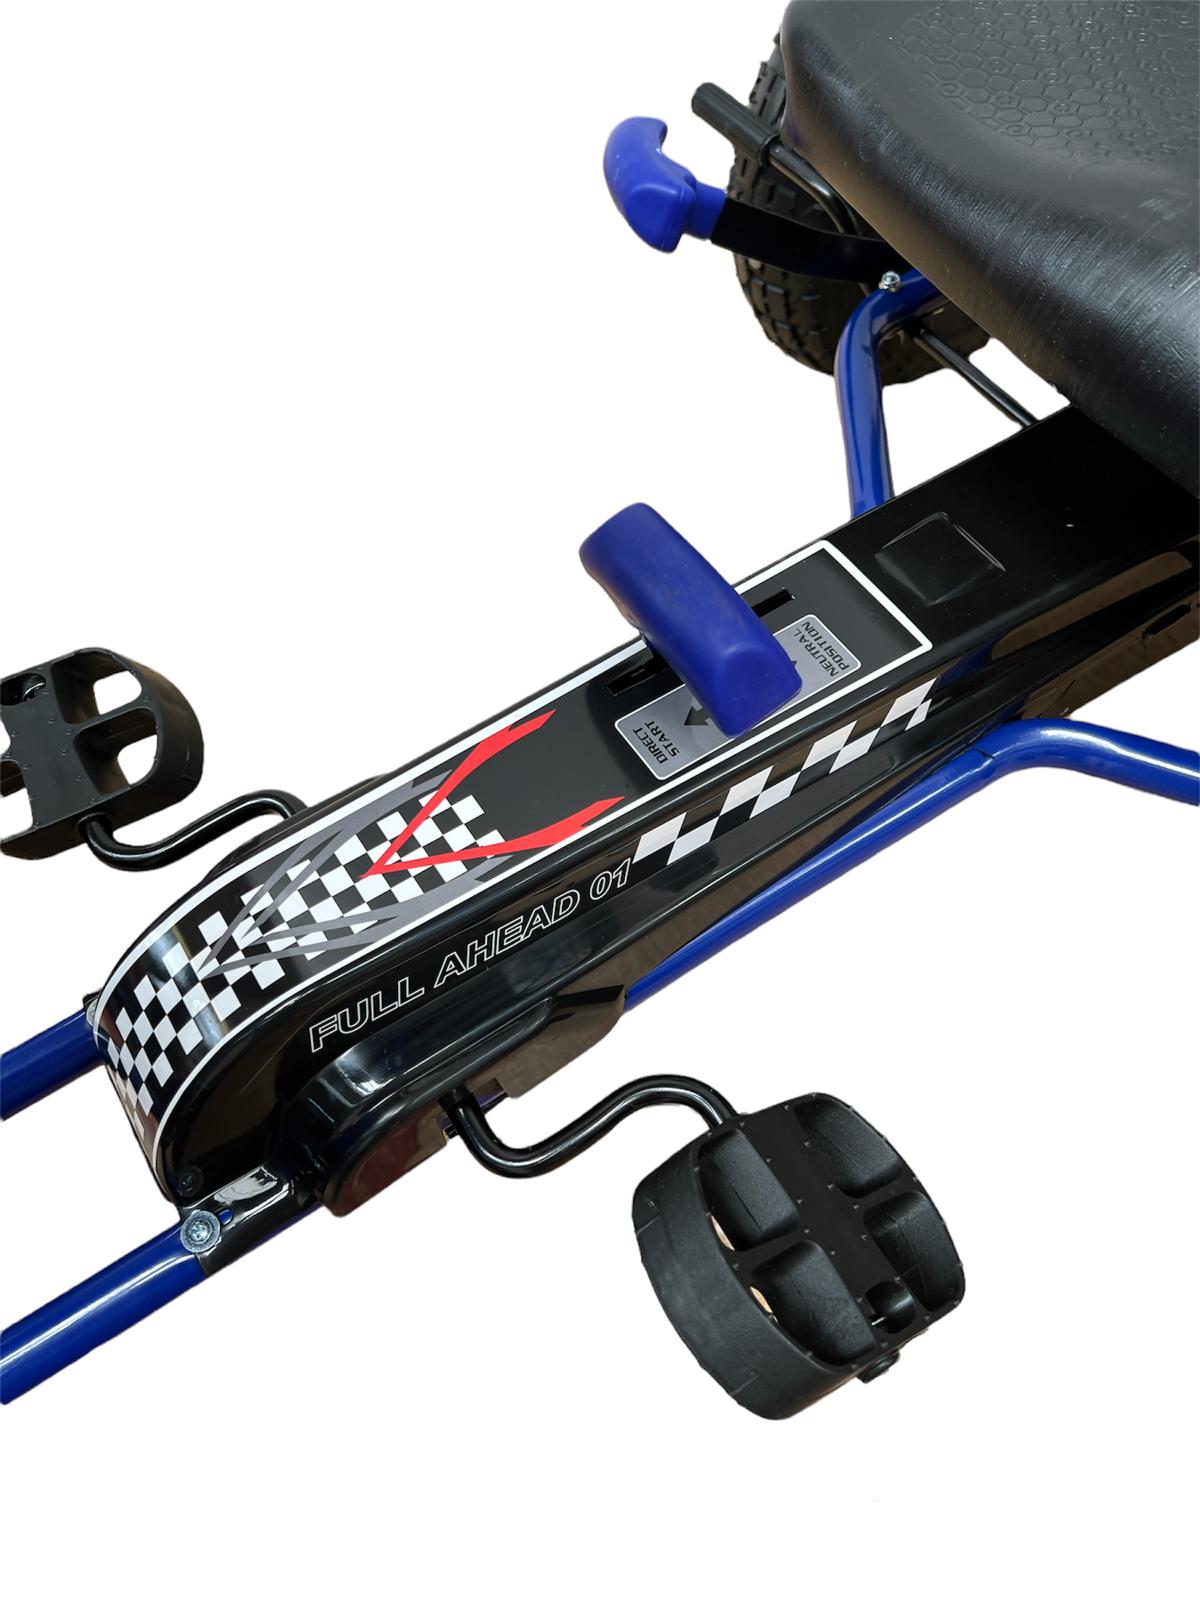 Kart little racer A15 metalic cu roti din cauciuc goflabile,pedale si frana pe spate,3-9 ani